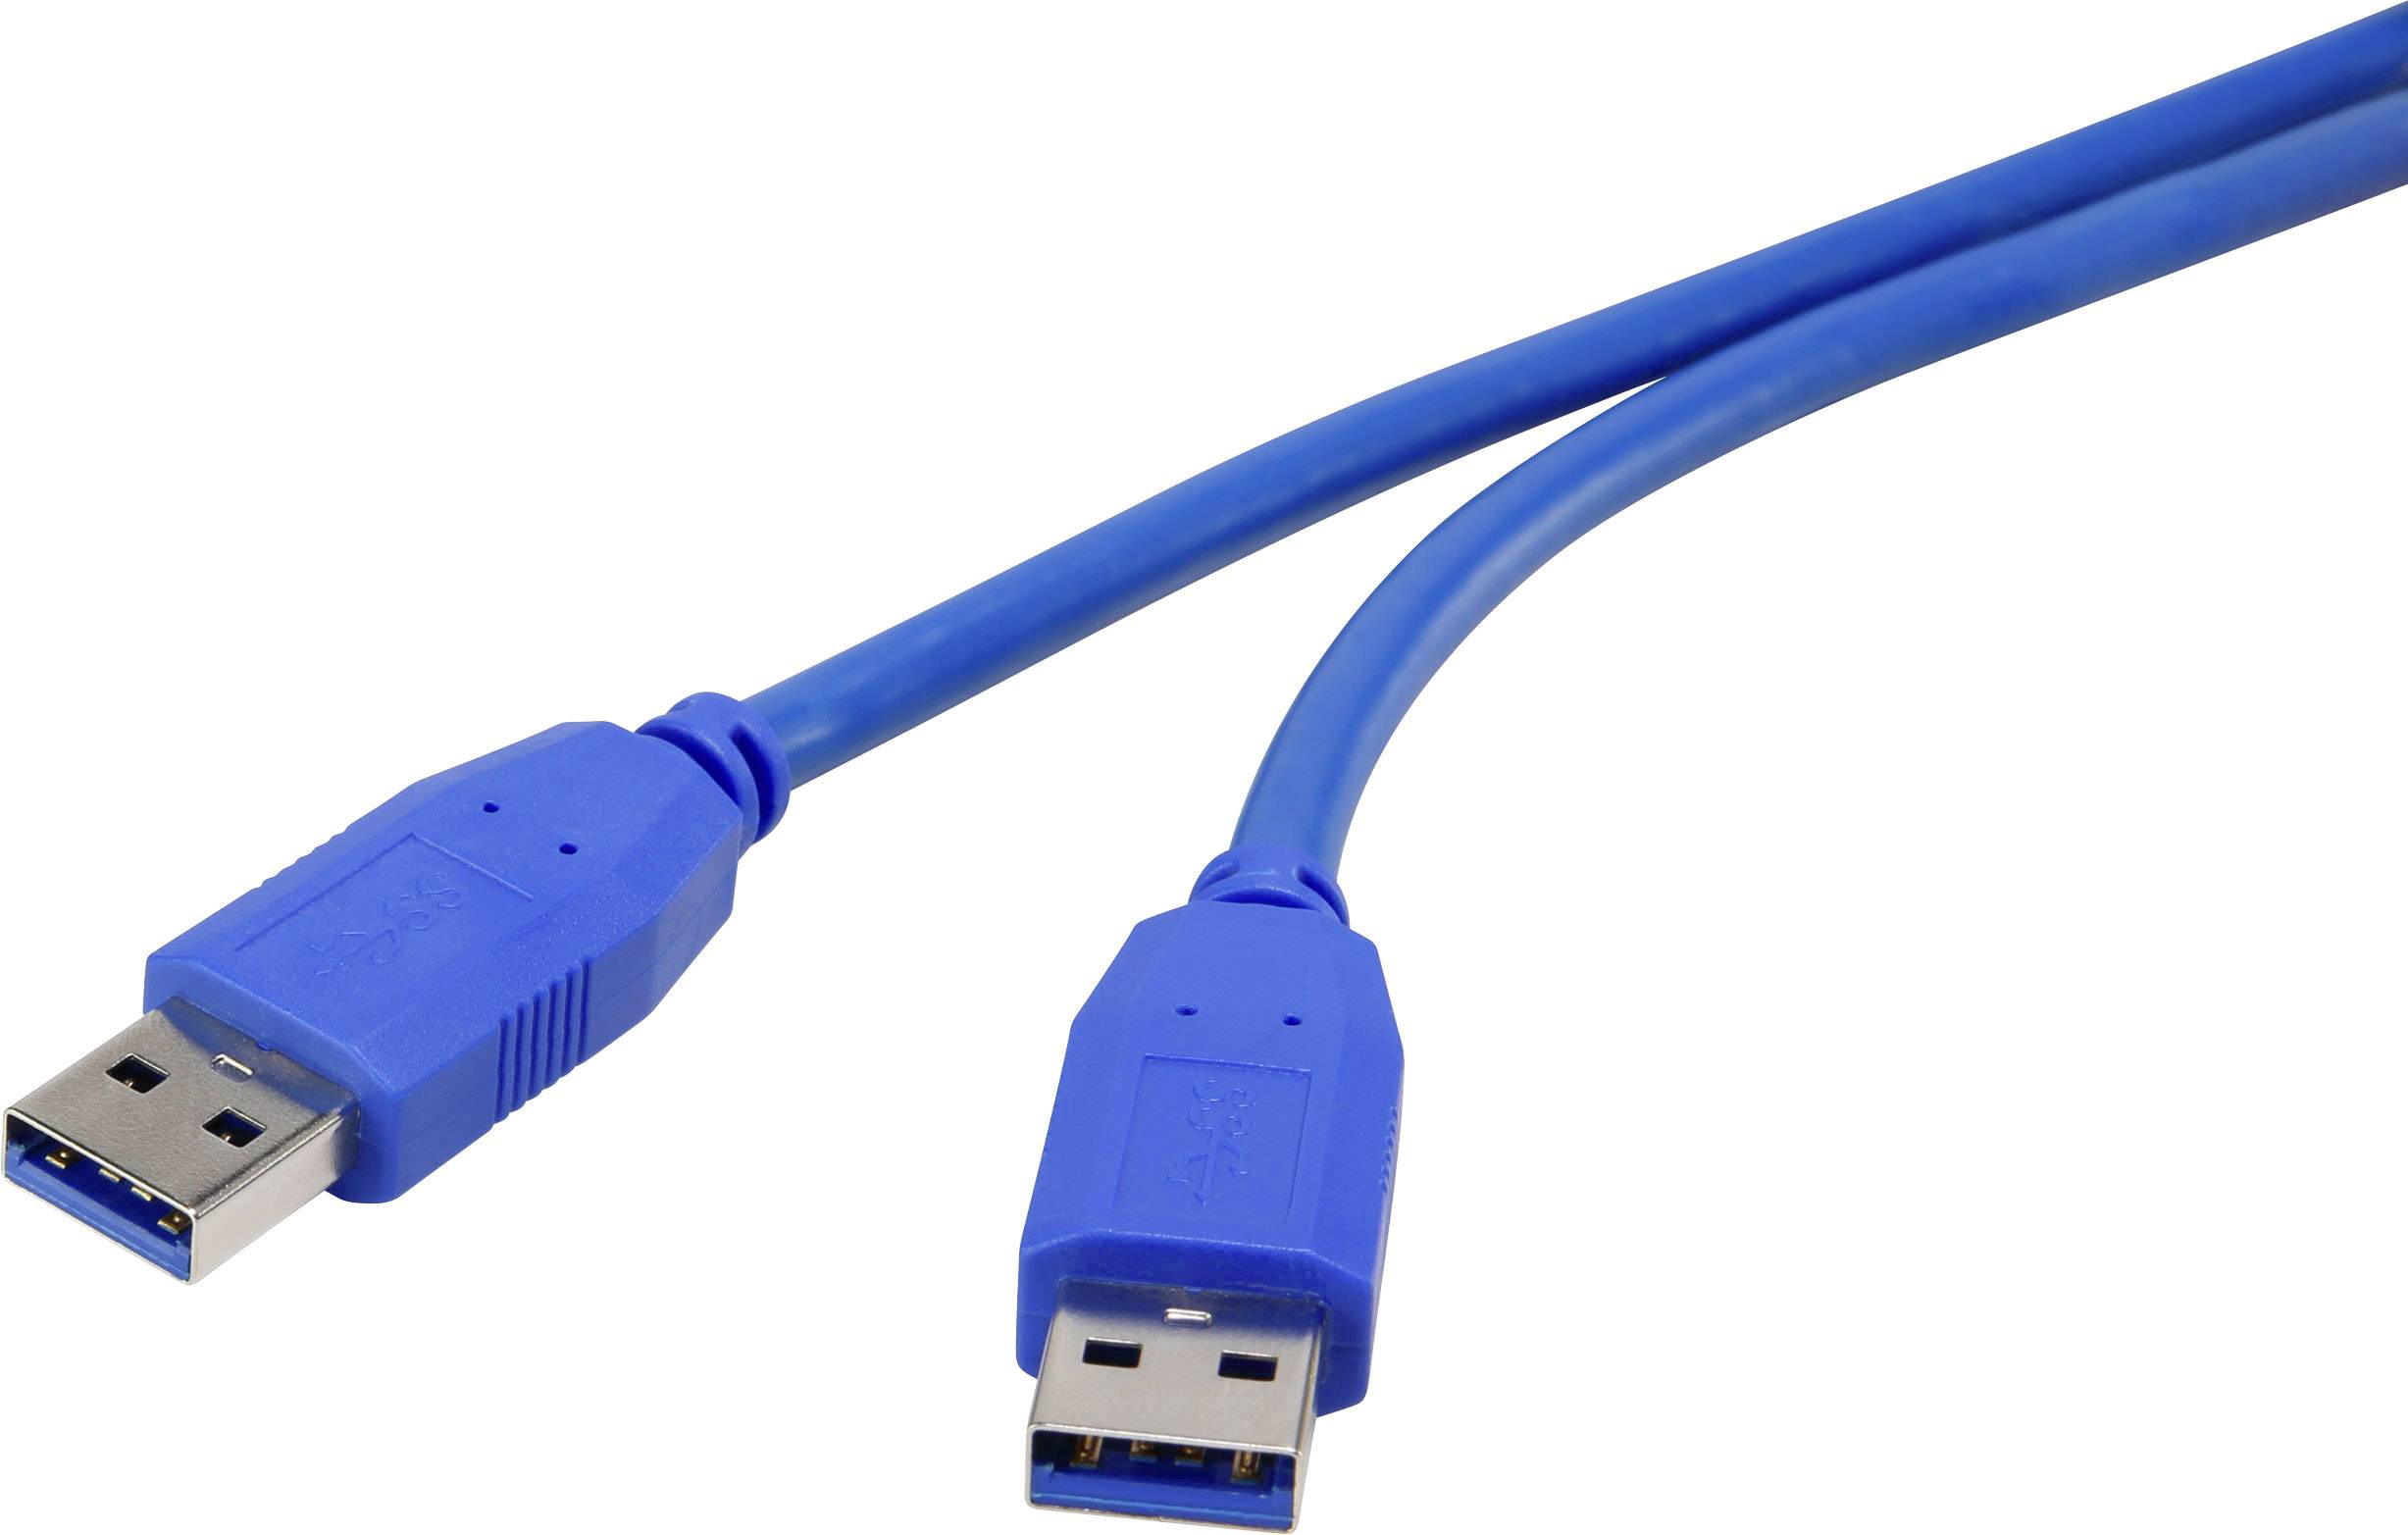 CONRAD Renkforce USB 3.0 Kabel [1x USB 3.0 Stecker A - 1x USB 3.0 Stecker A] 1.8 m Blau vergoldete S